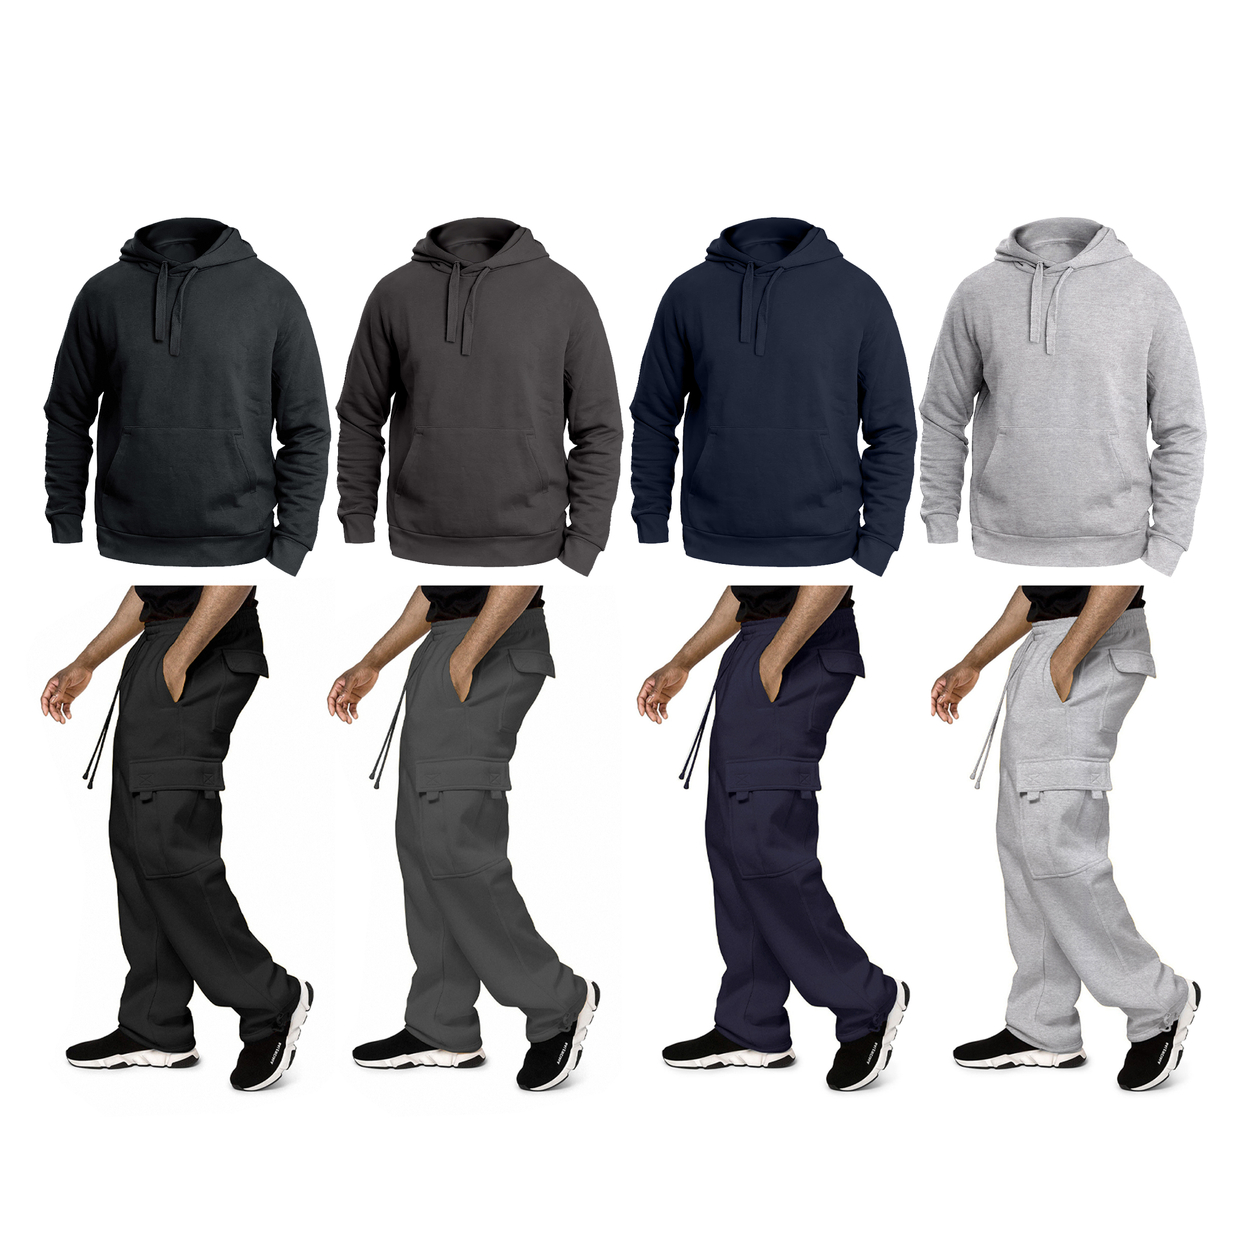 Men's Big & Tall Winter Warm Cozy Athletic Fleece Lined Multi-Pocket Cargo Sweatsuit - Navy, Large